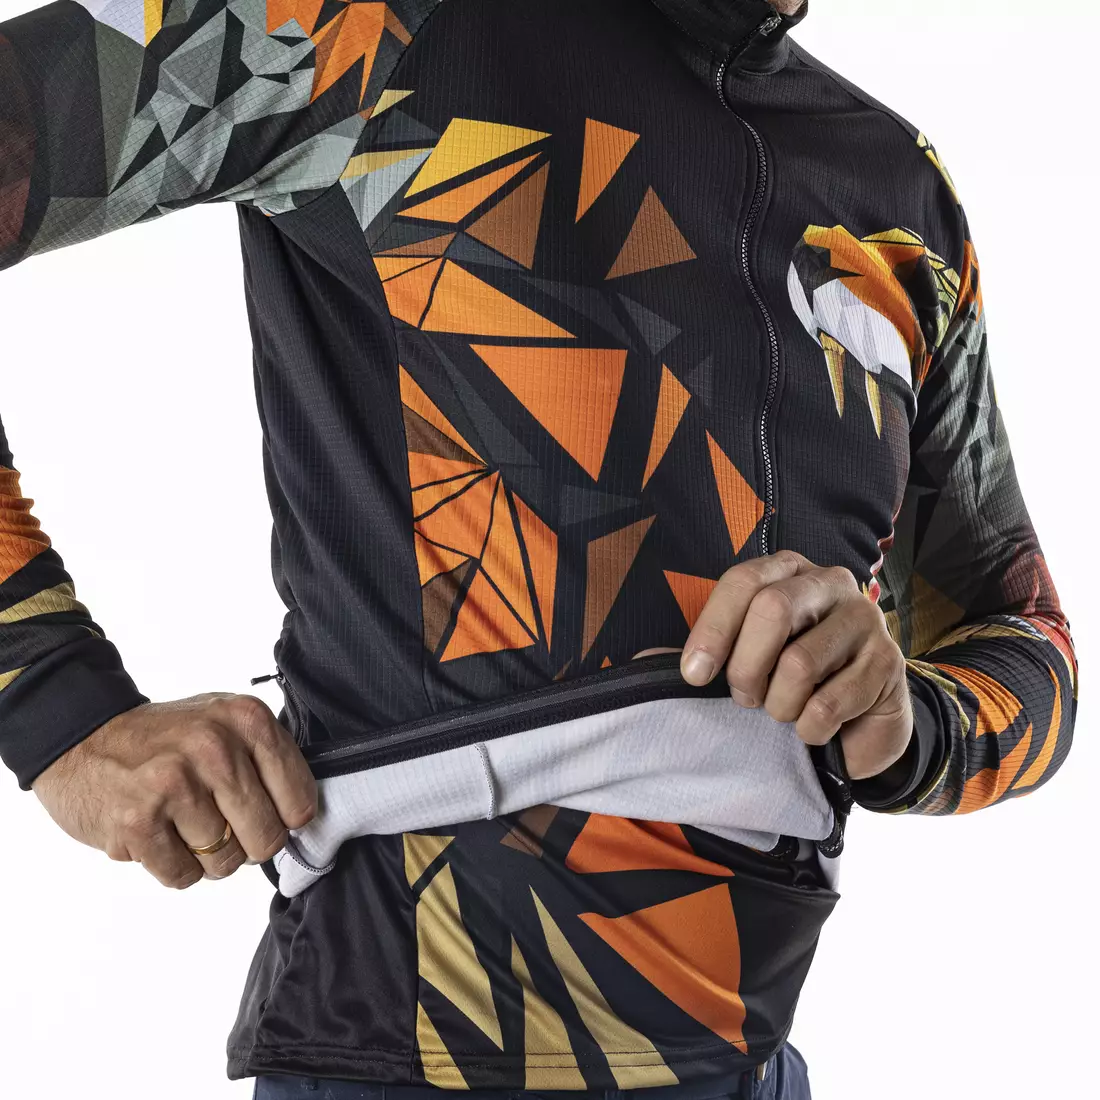 KAYMAQ DESIGN M79 Men's Cycling Sweatshirt